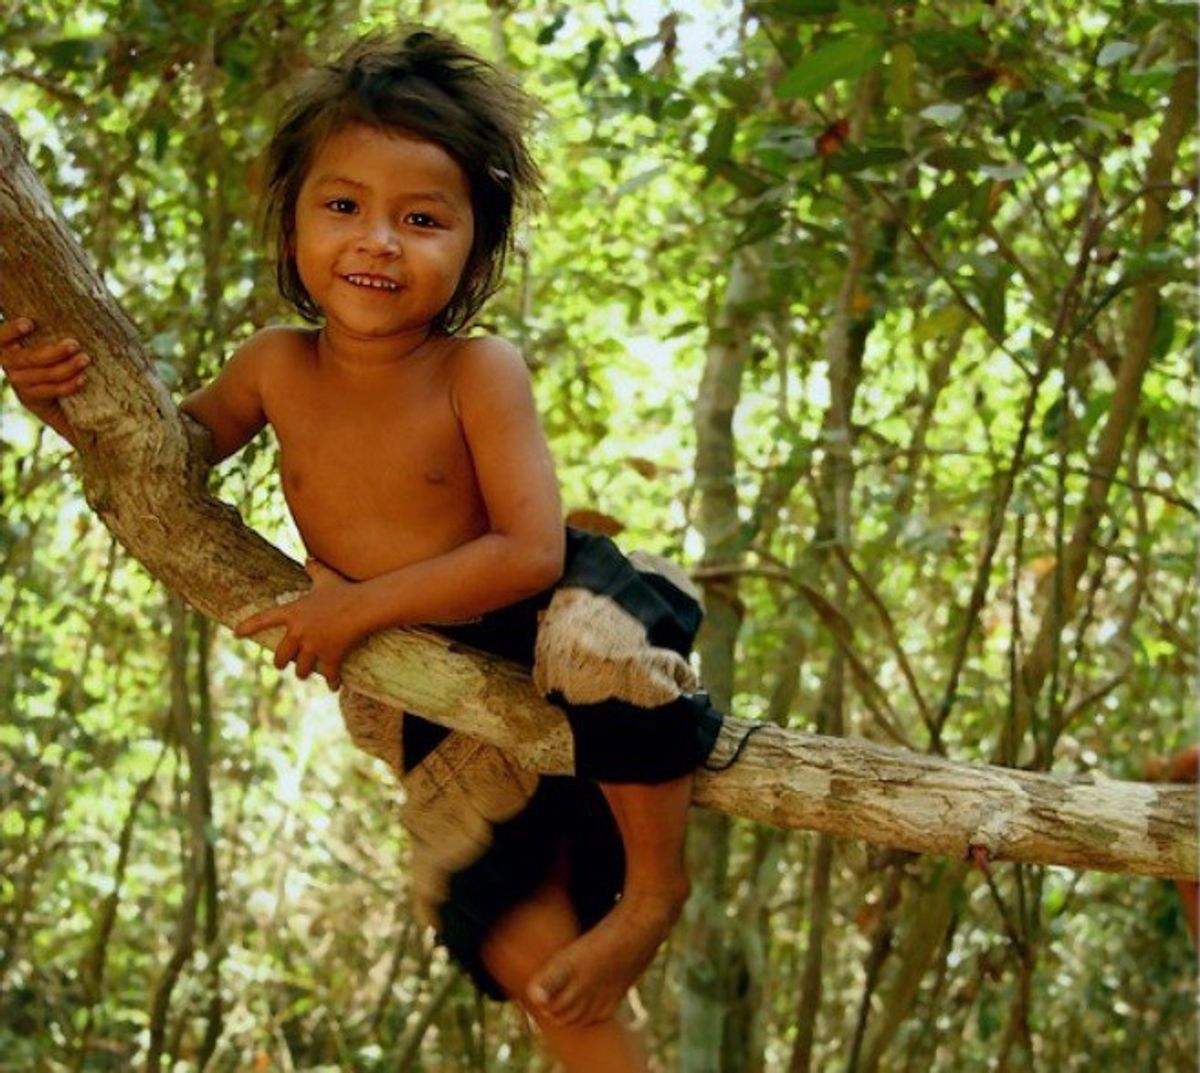 The Phenomenon Of "Mowgli Children"